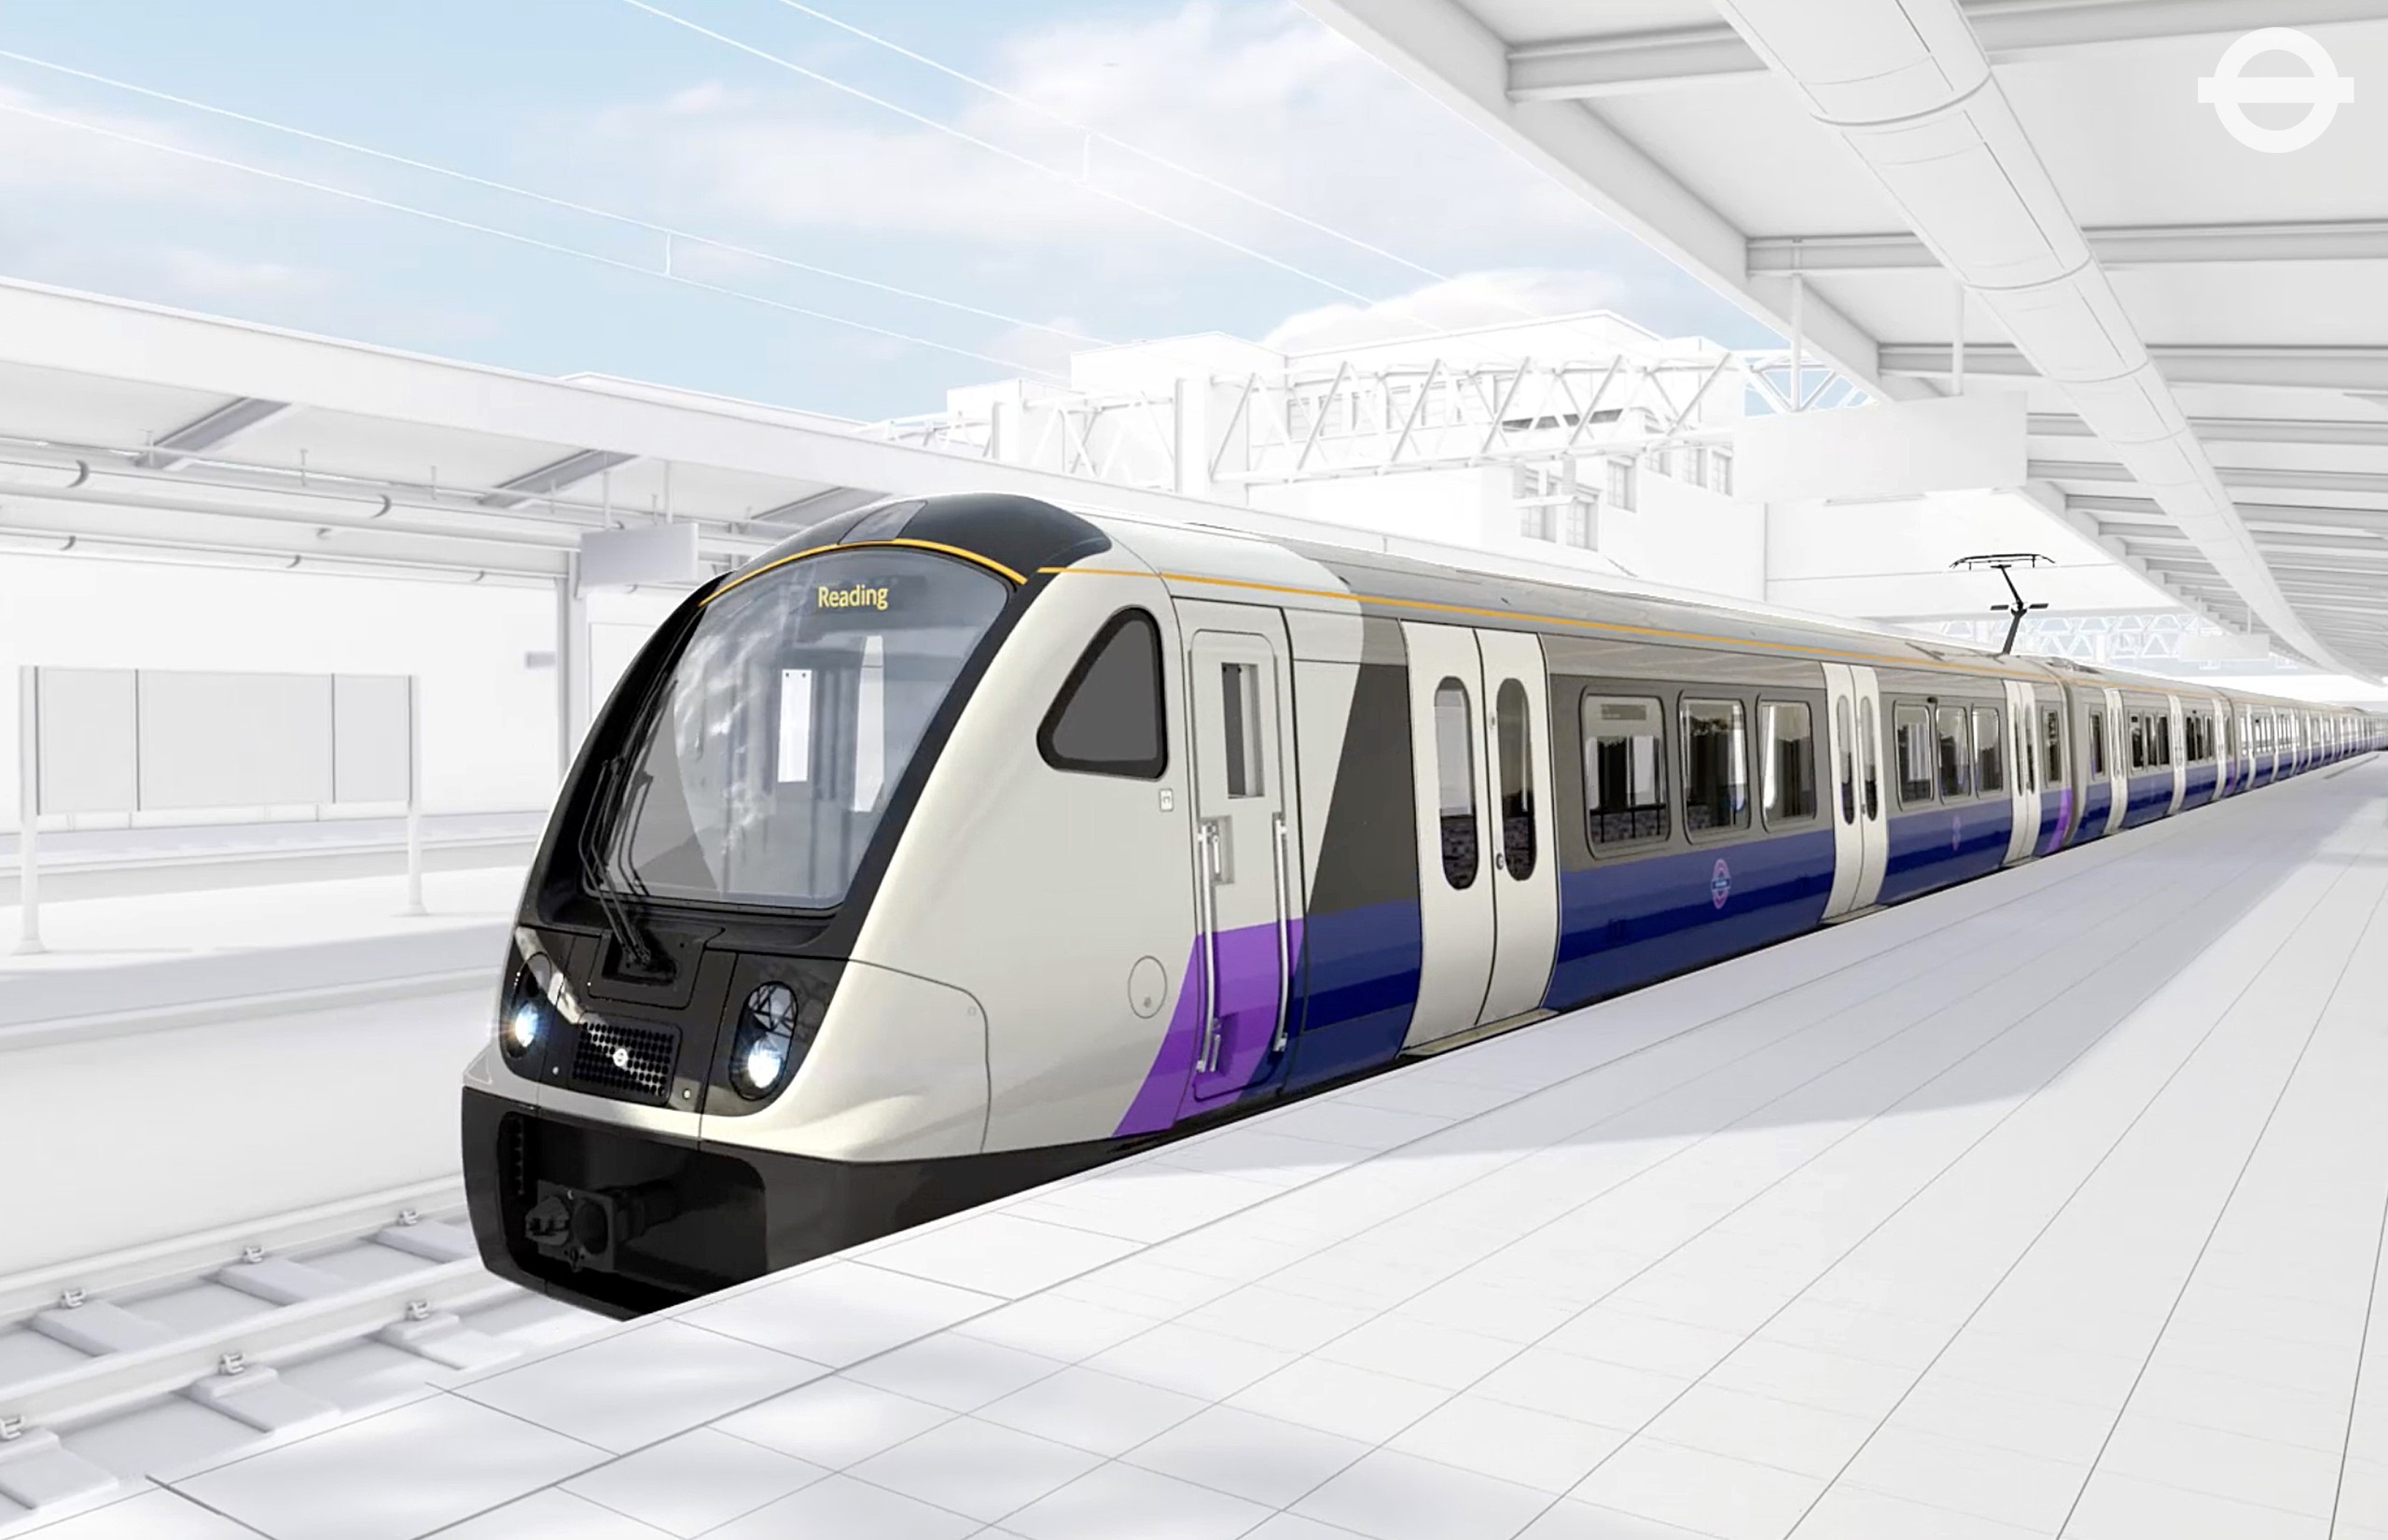 New trains - Crossrail